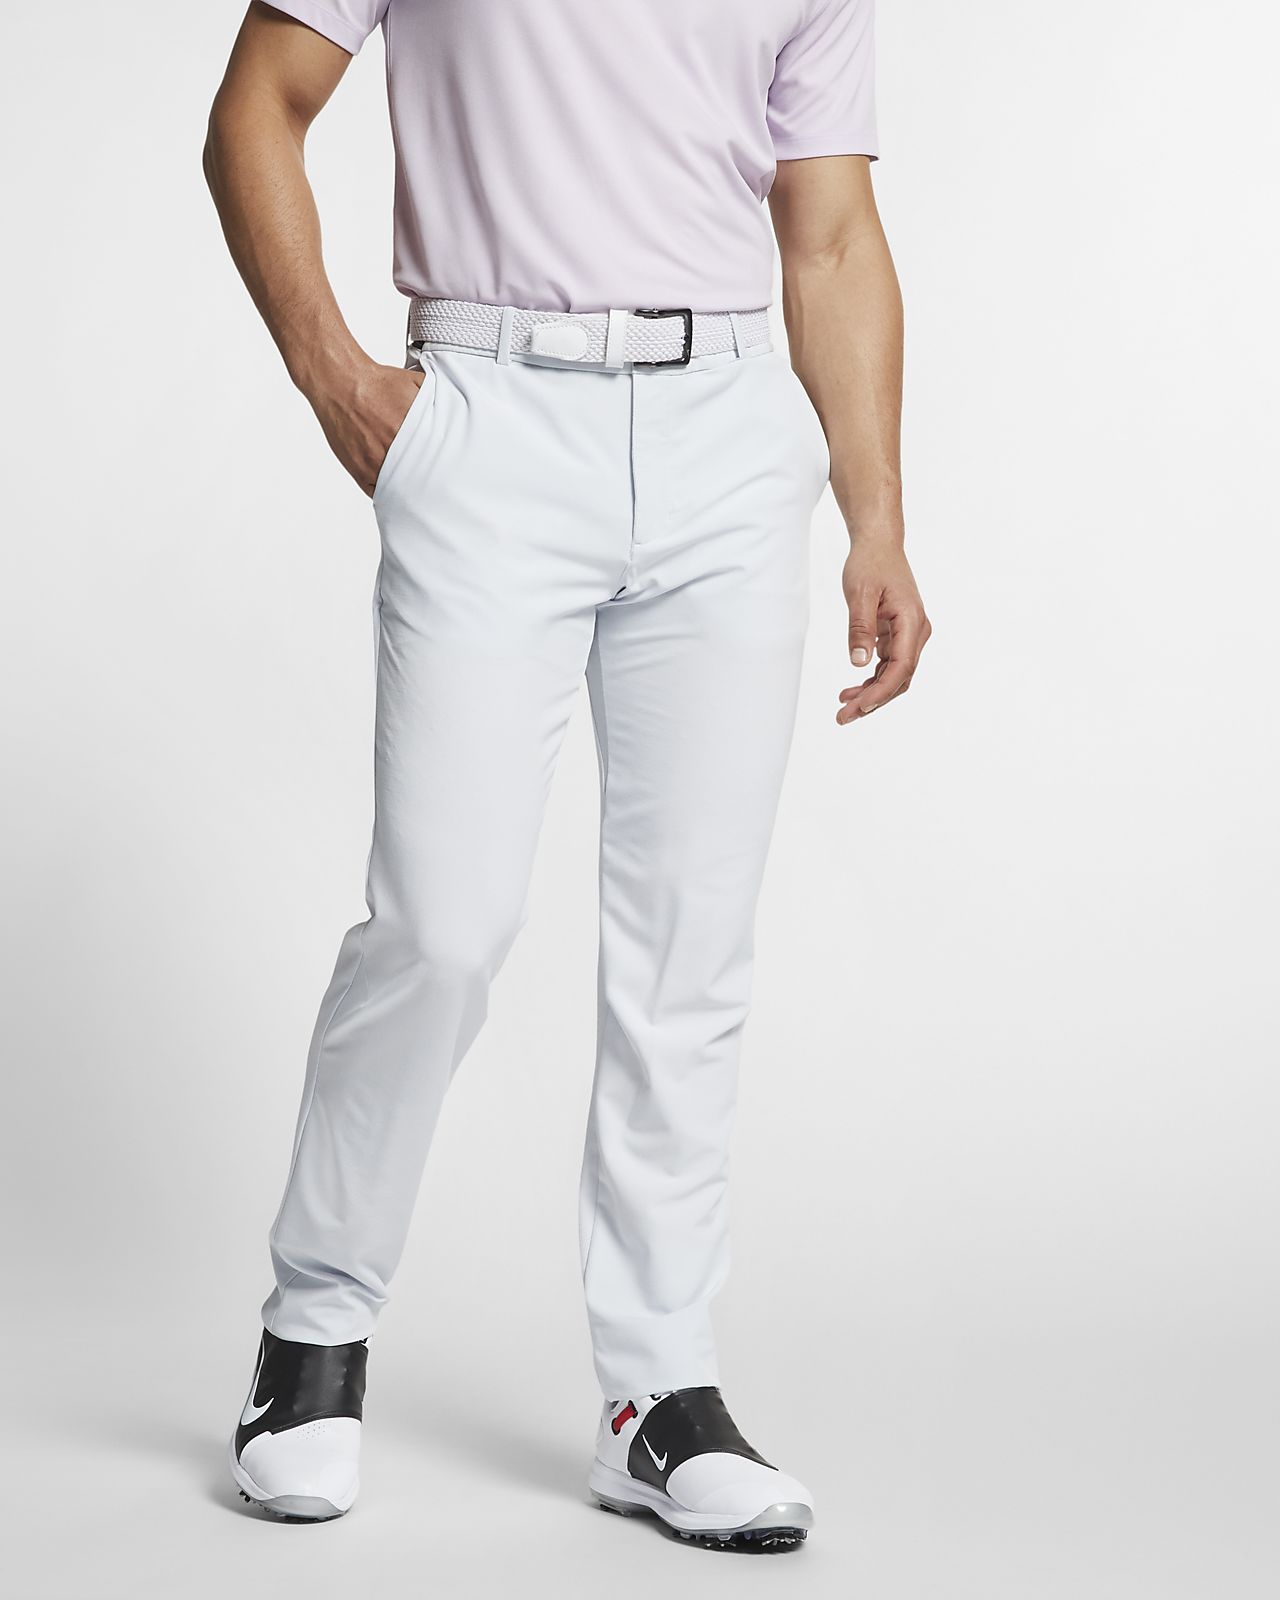 Nike Flex Men's Slim-Fit Golf Trousers 